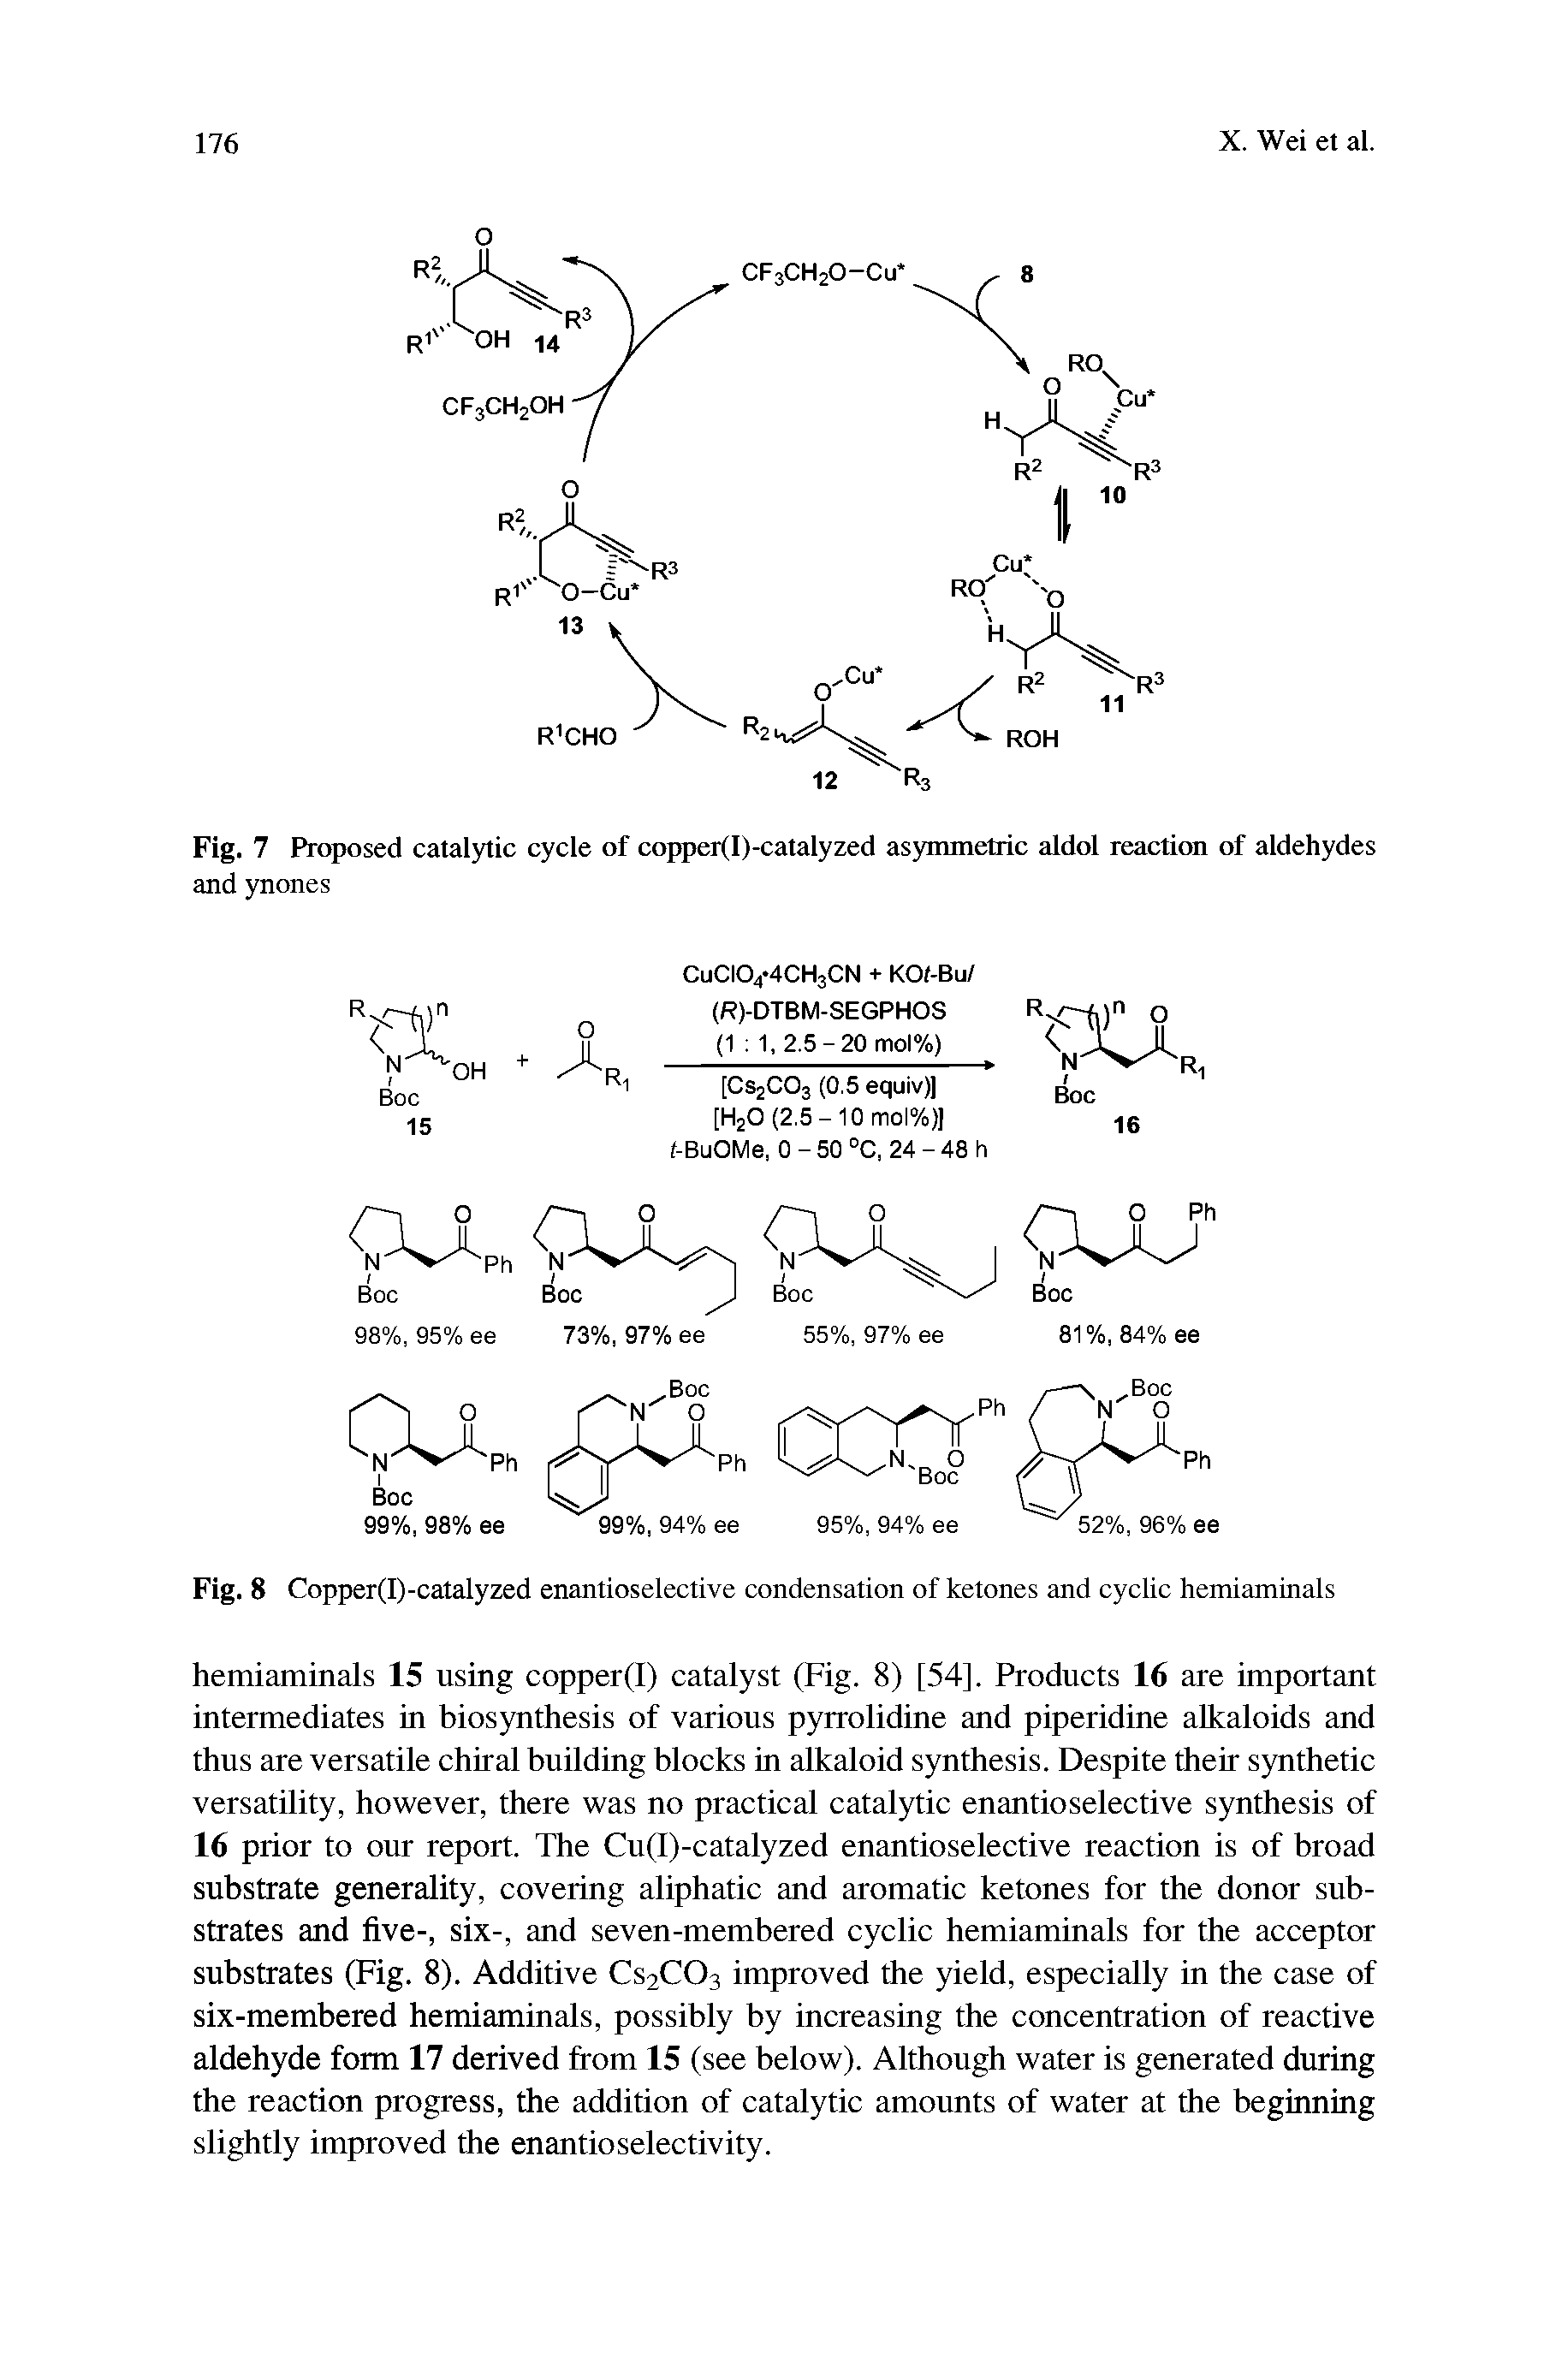 Fig. 8 Copper(I)-catalyzed enantioselective condensation of ketones and cyclic hemiaminals...